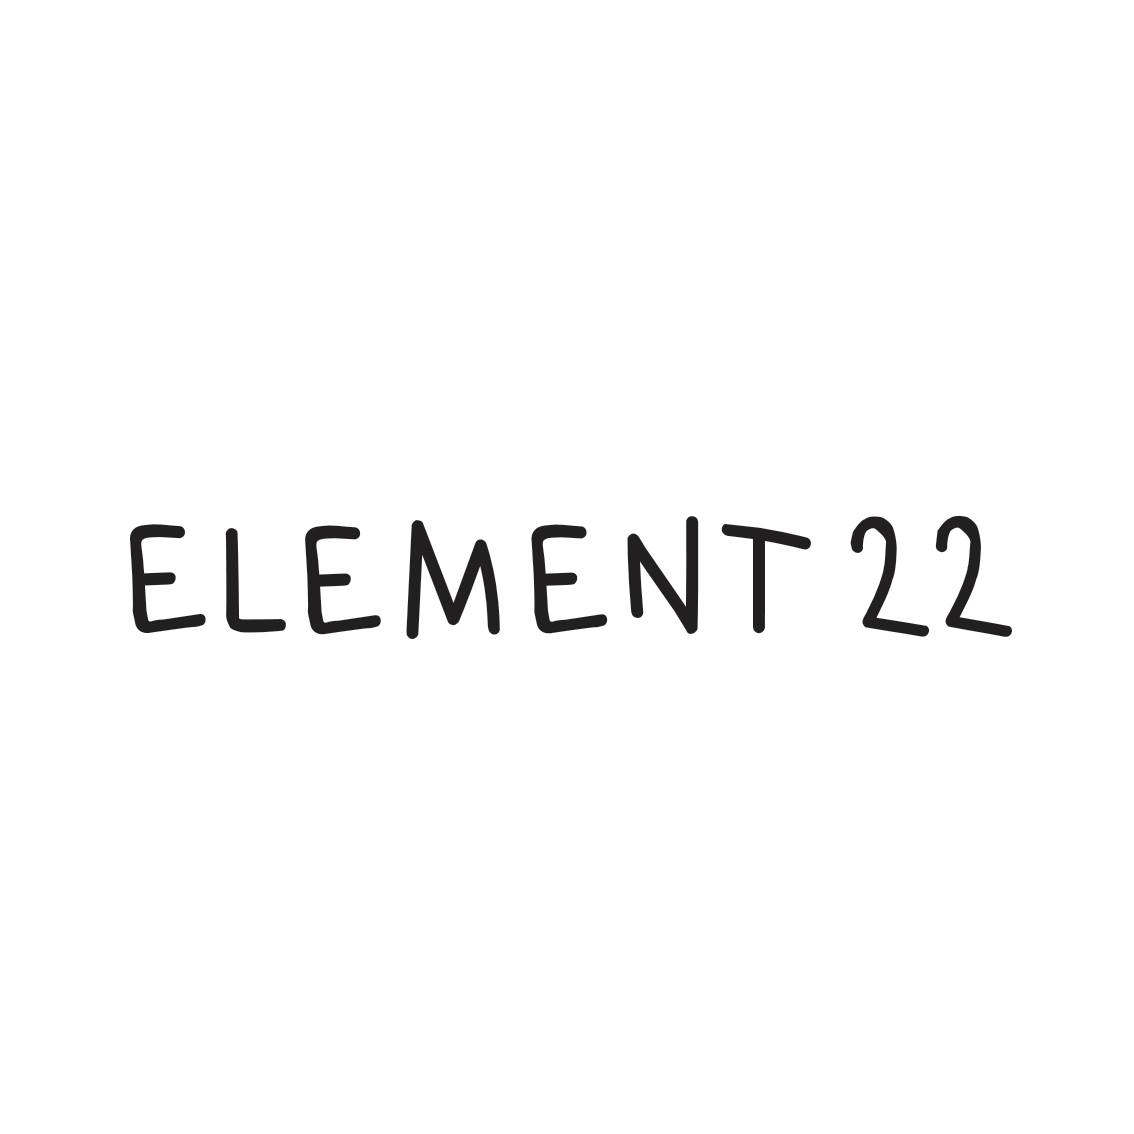 Element 22 logo